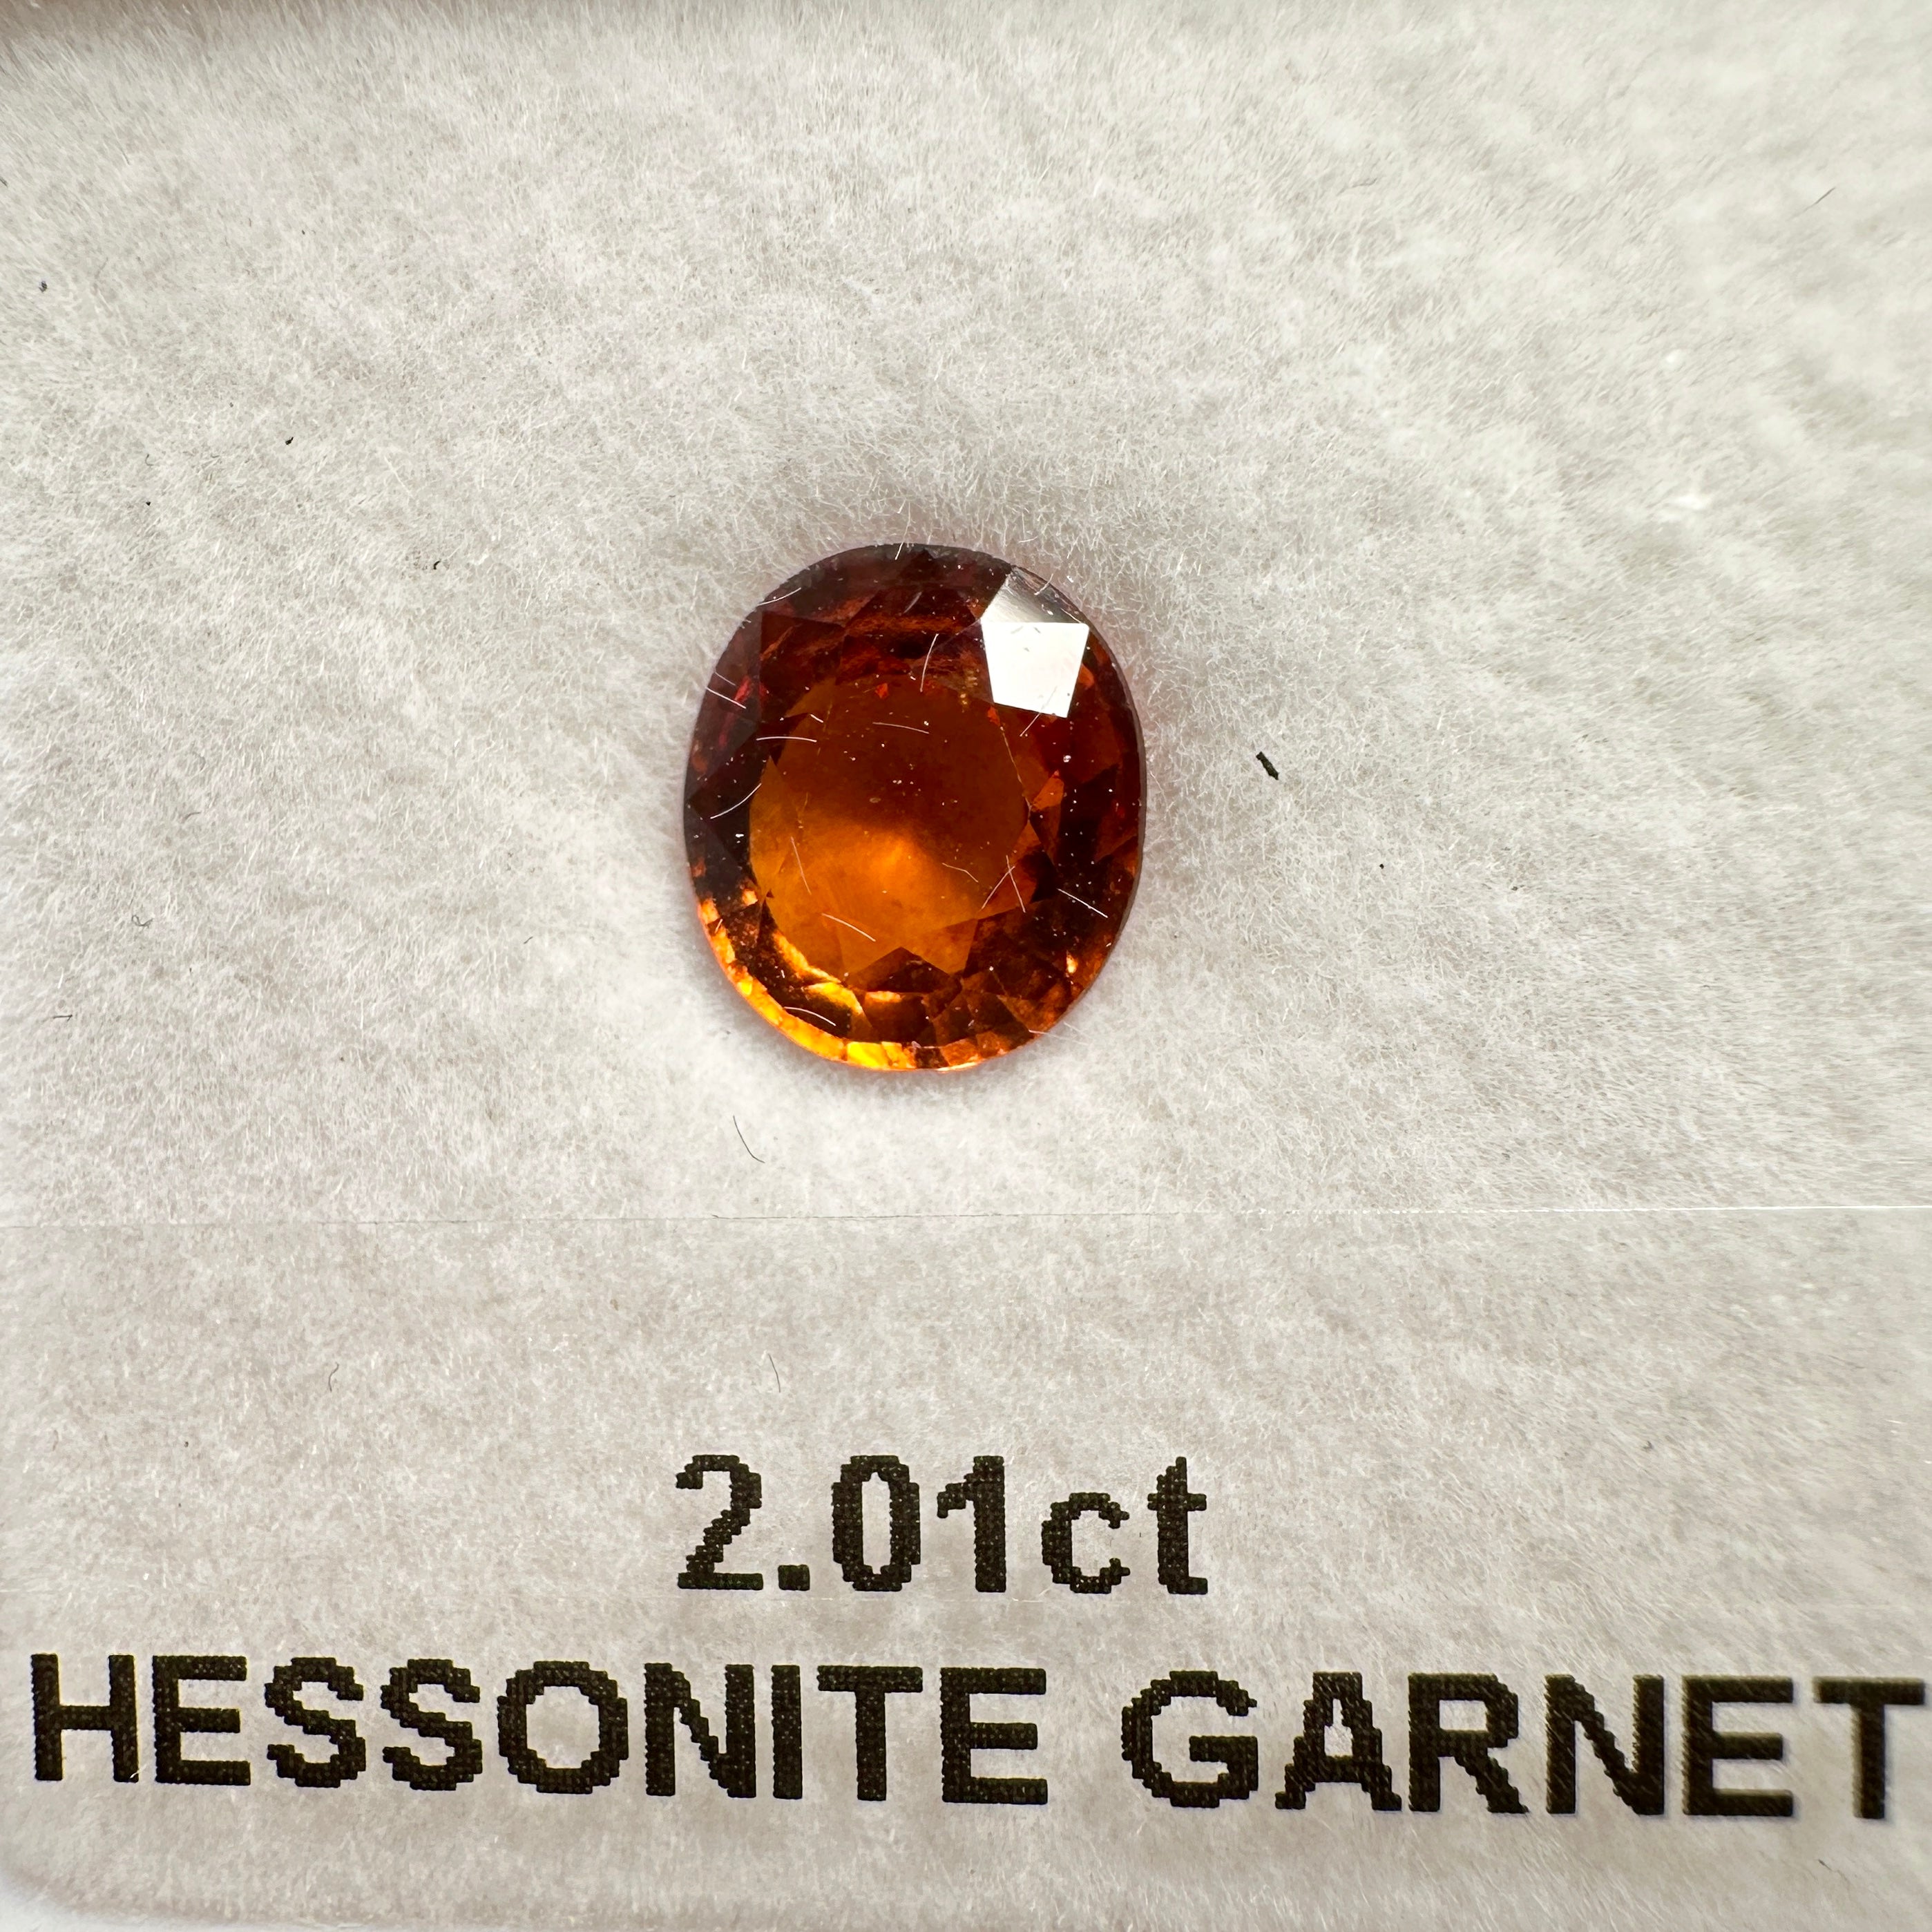 2.01ct Hessonite Garnet, Untreated Unheated, native cut